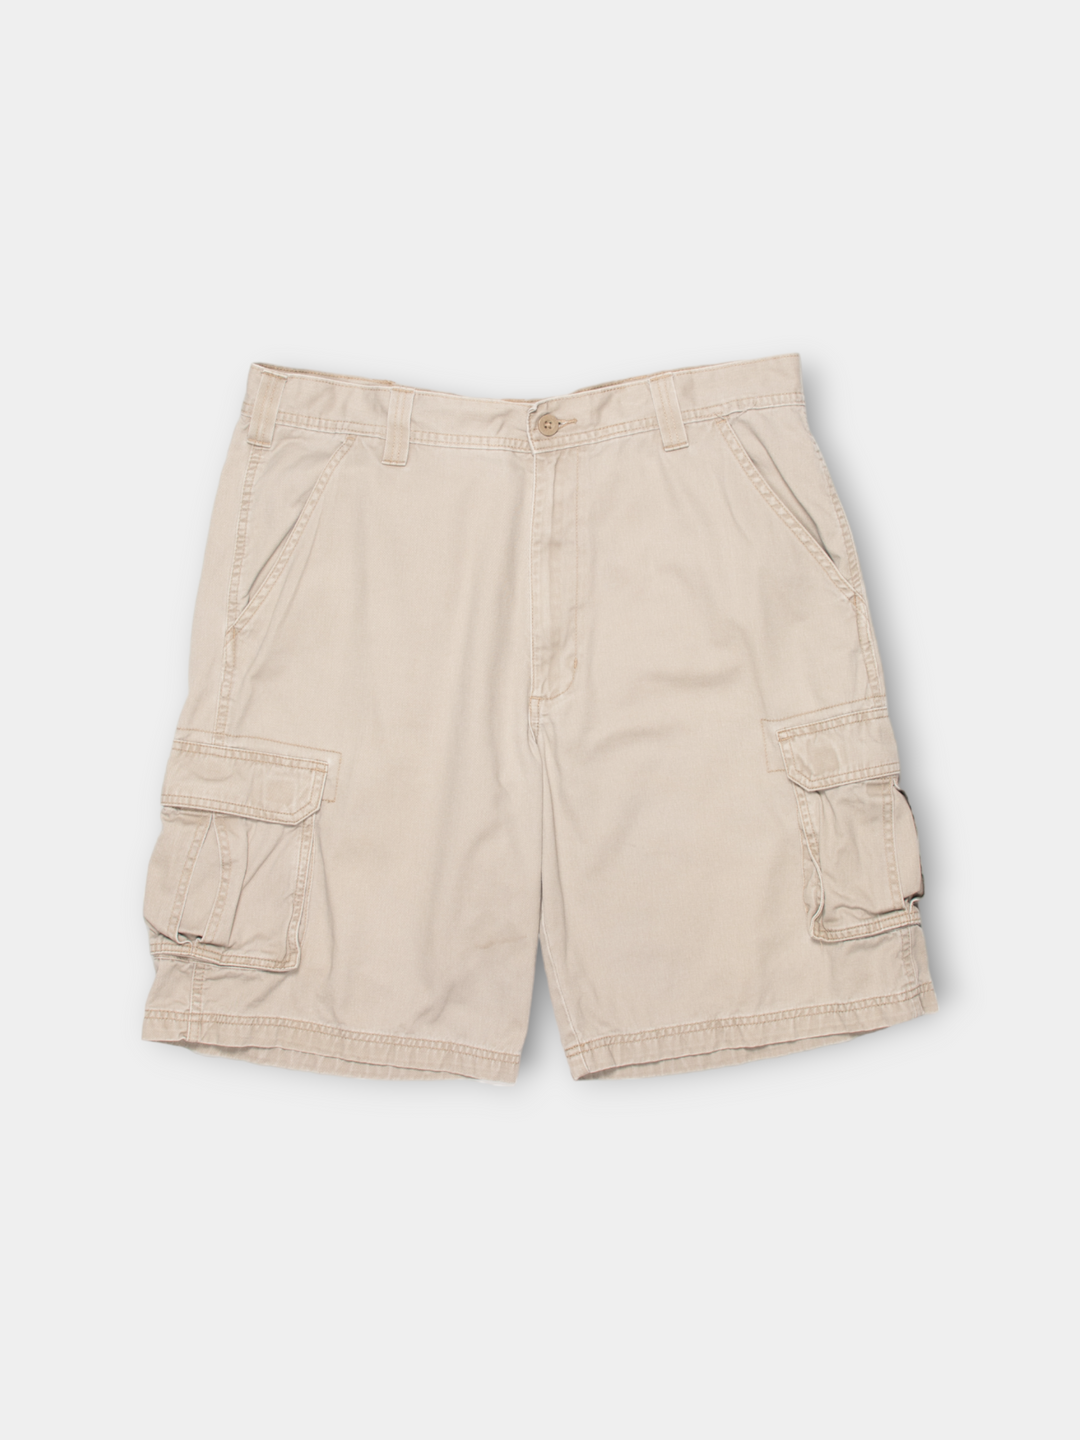 Vintage Wrangler Cargo Shorts (38")